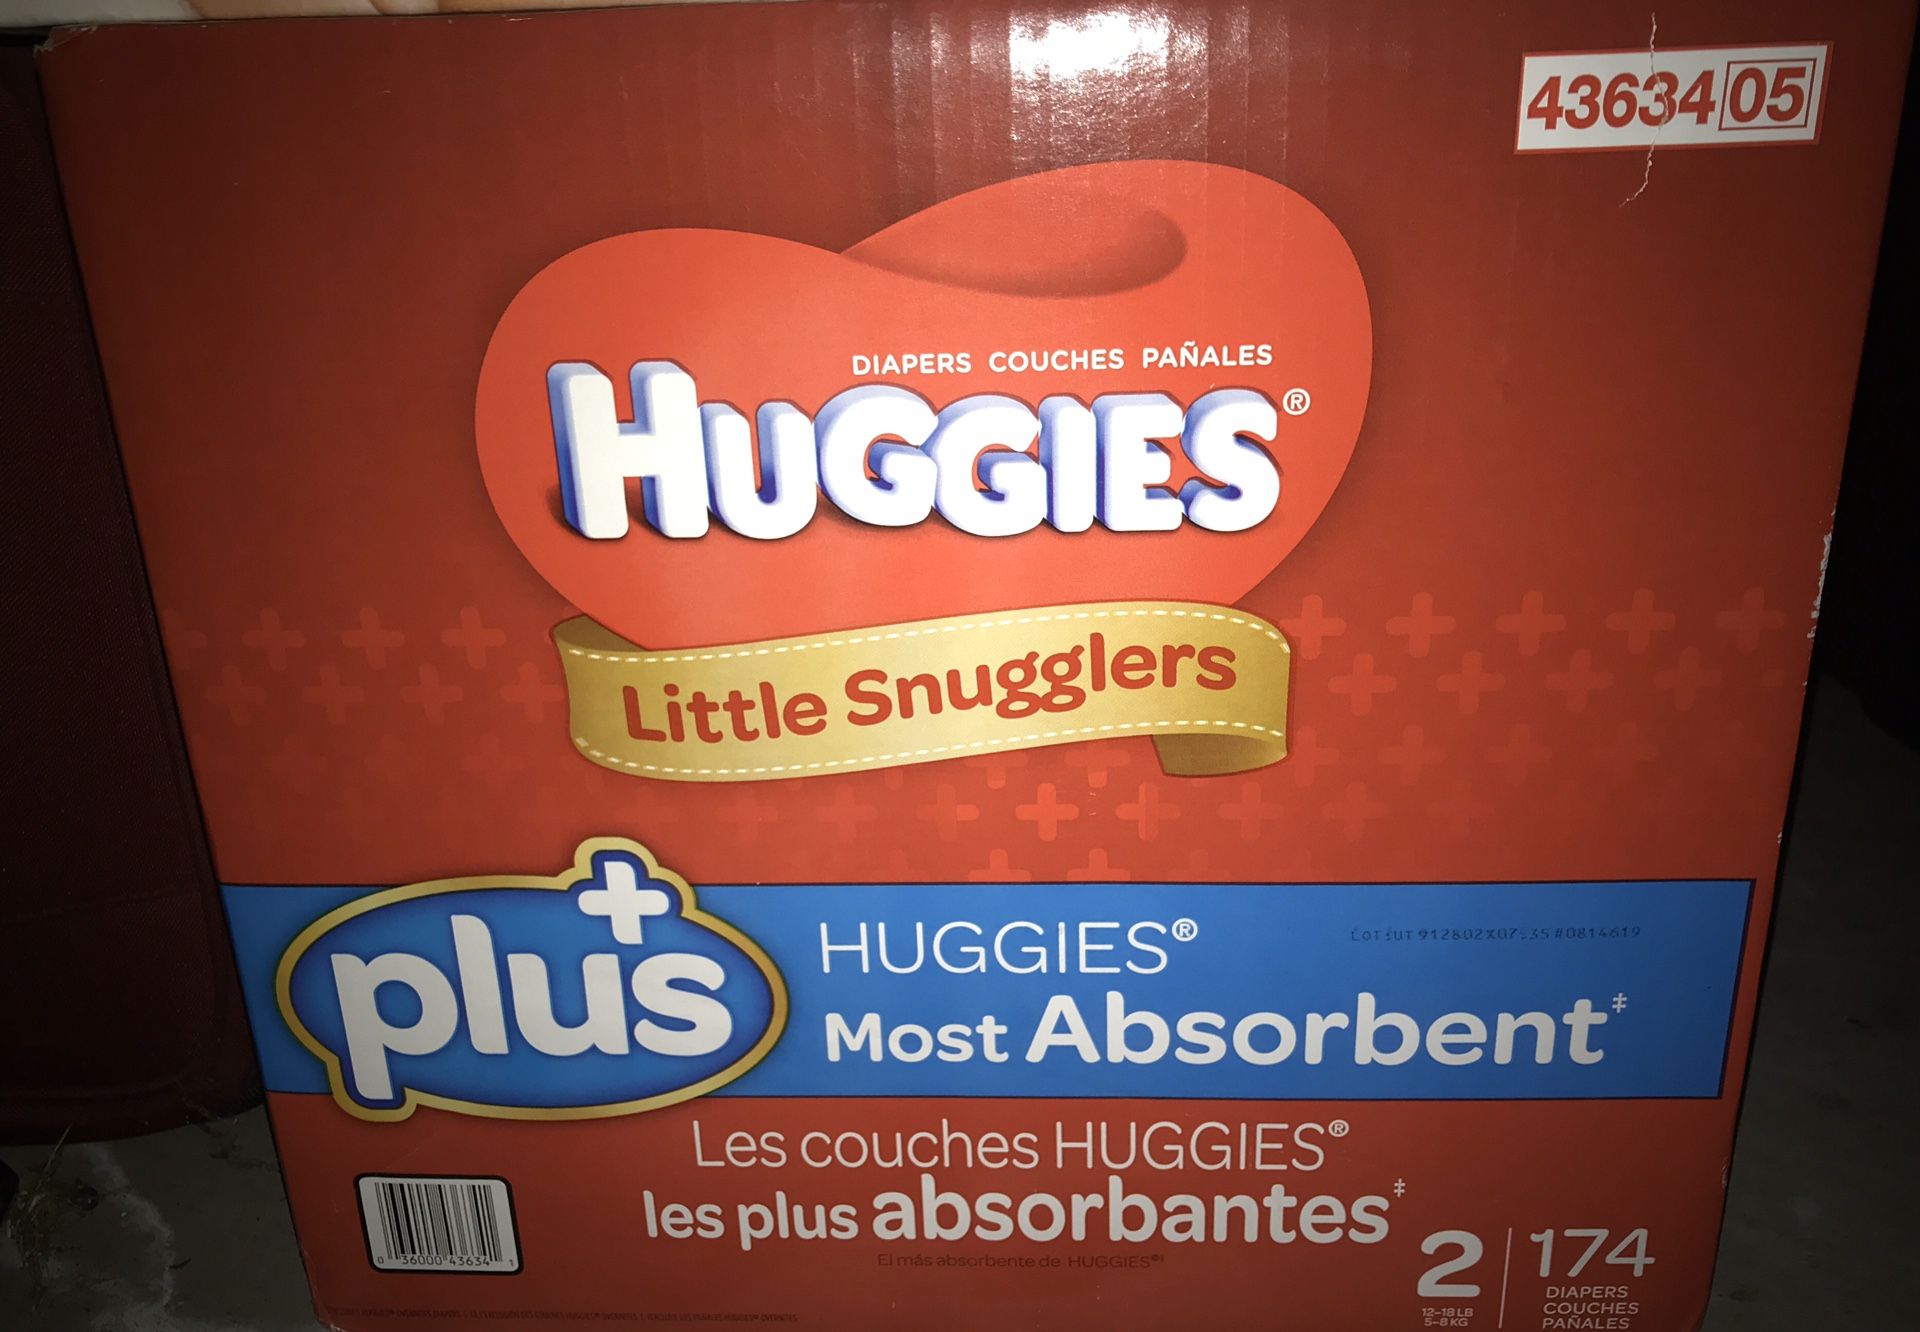 Huggies Diapers Size 2